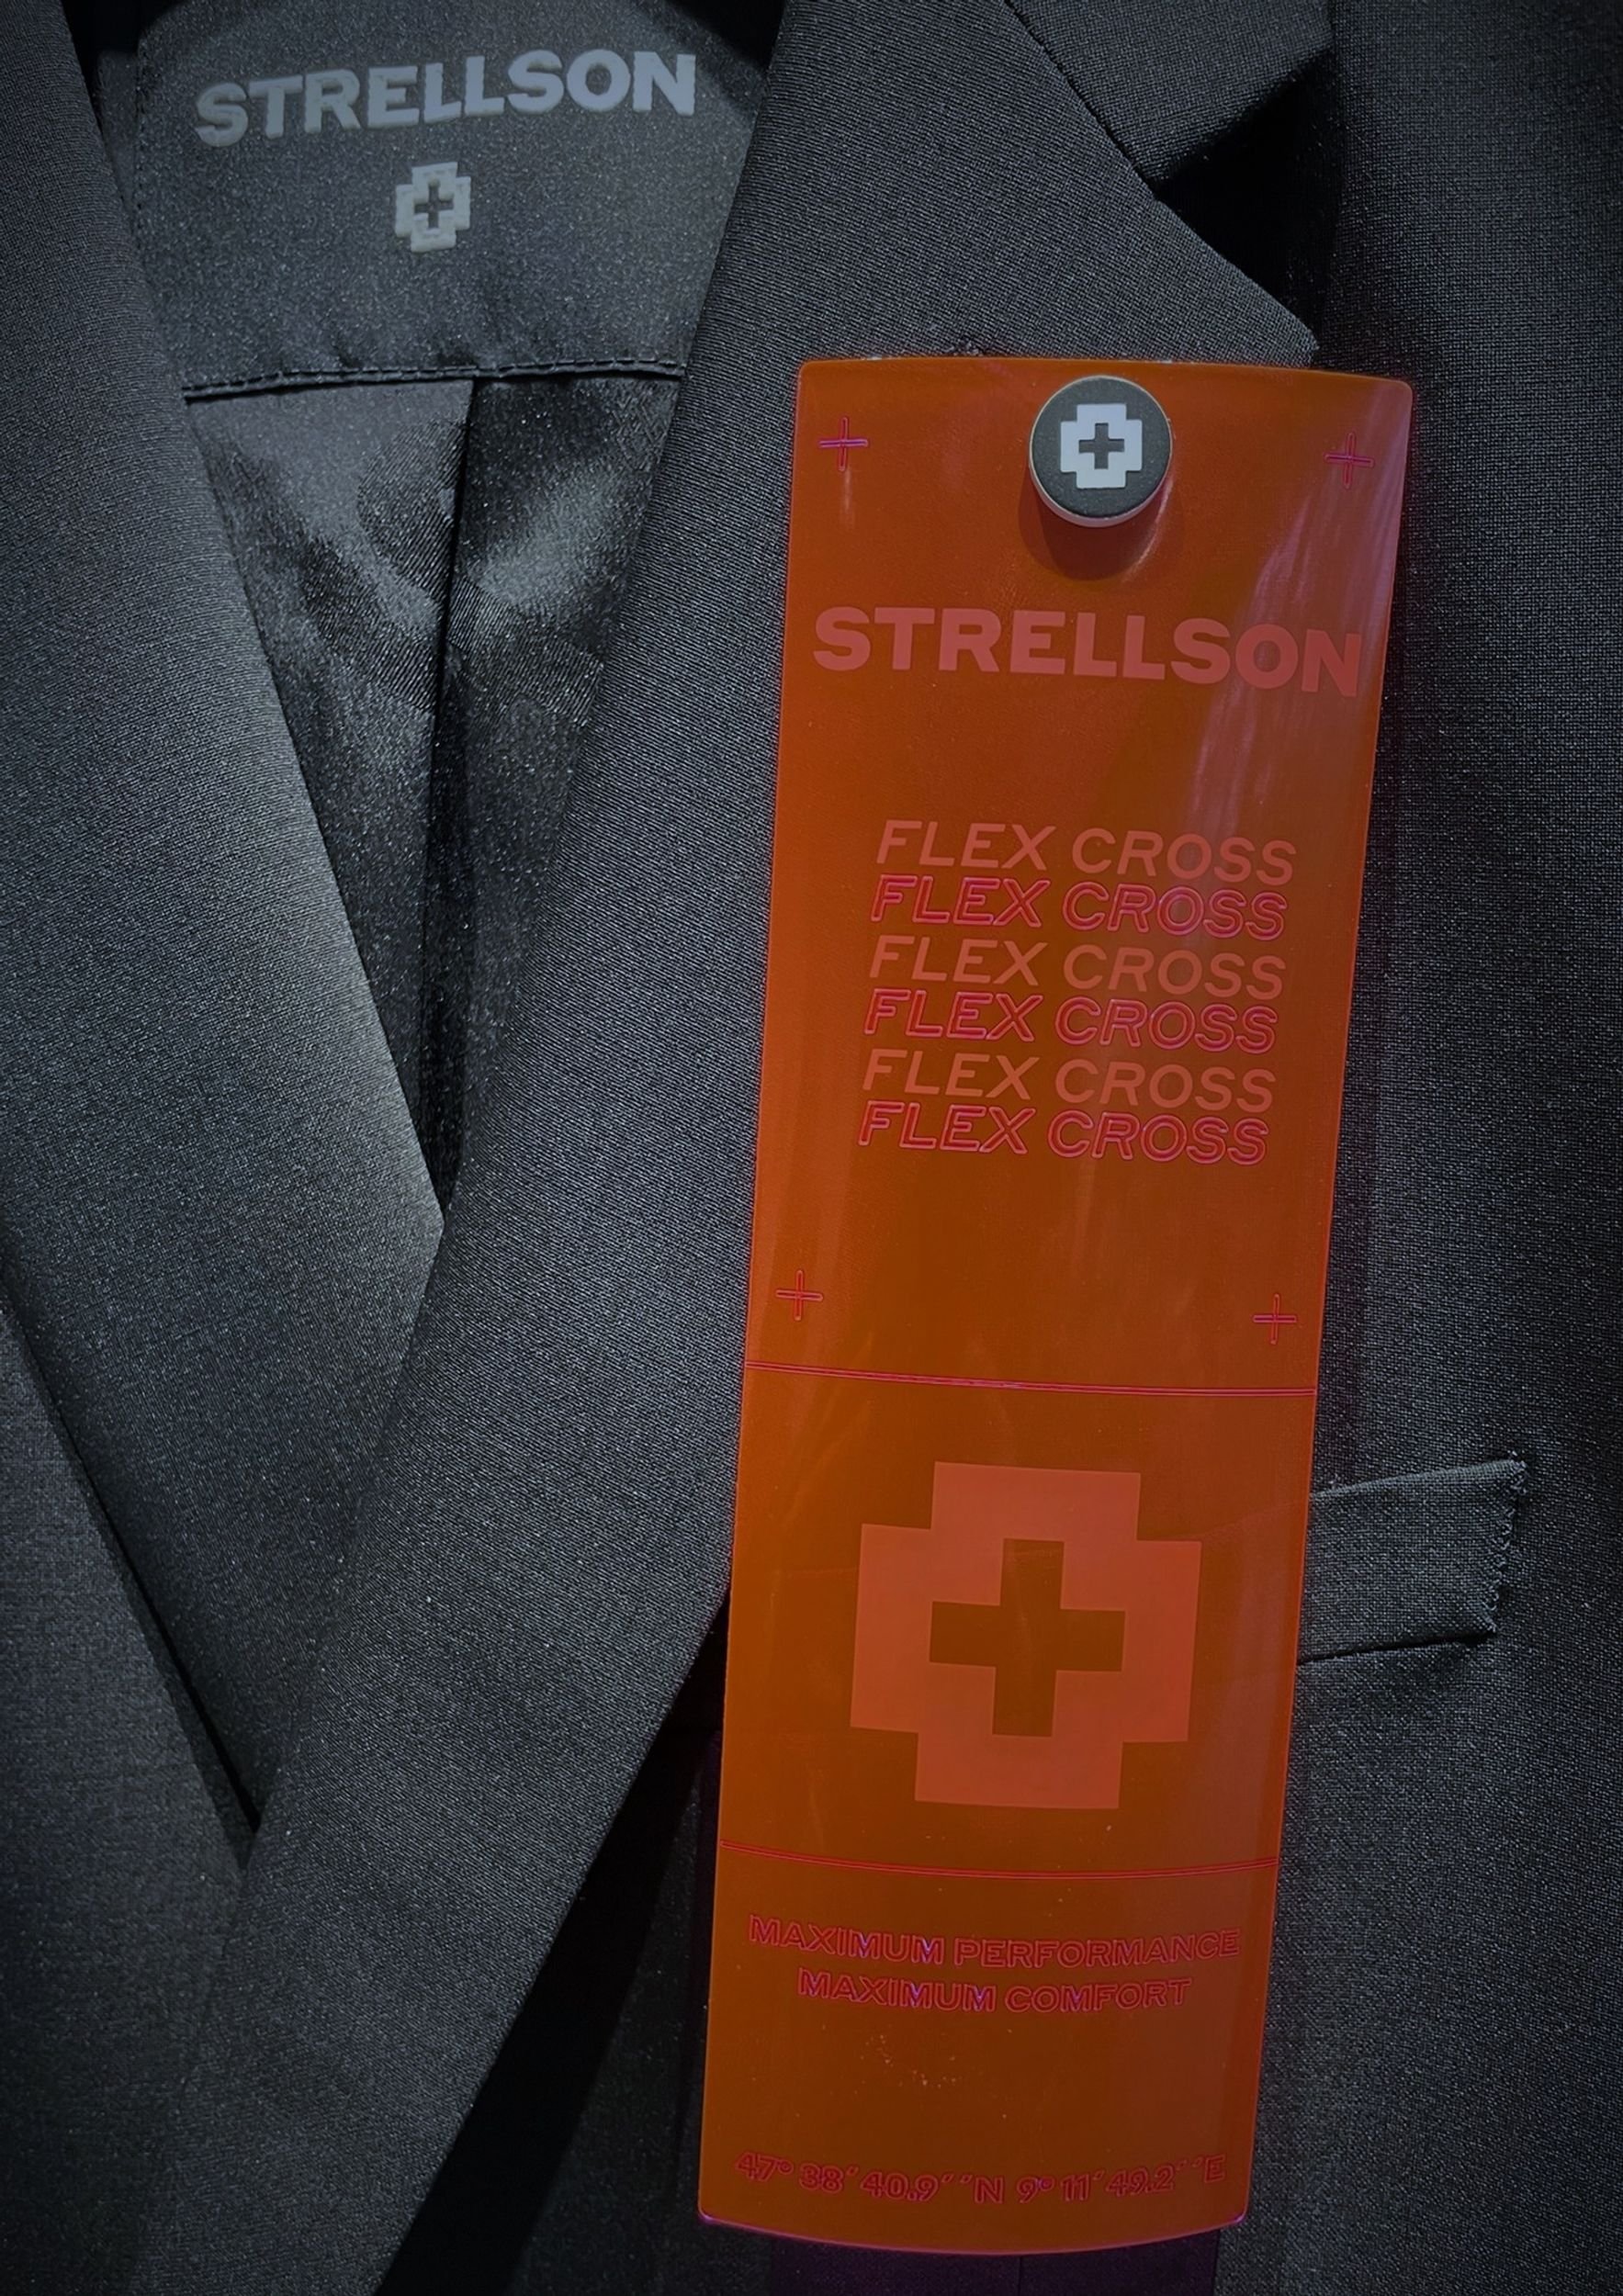 Strellson Business Sakko 